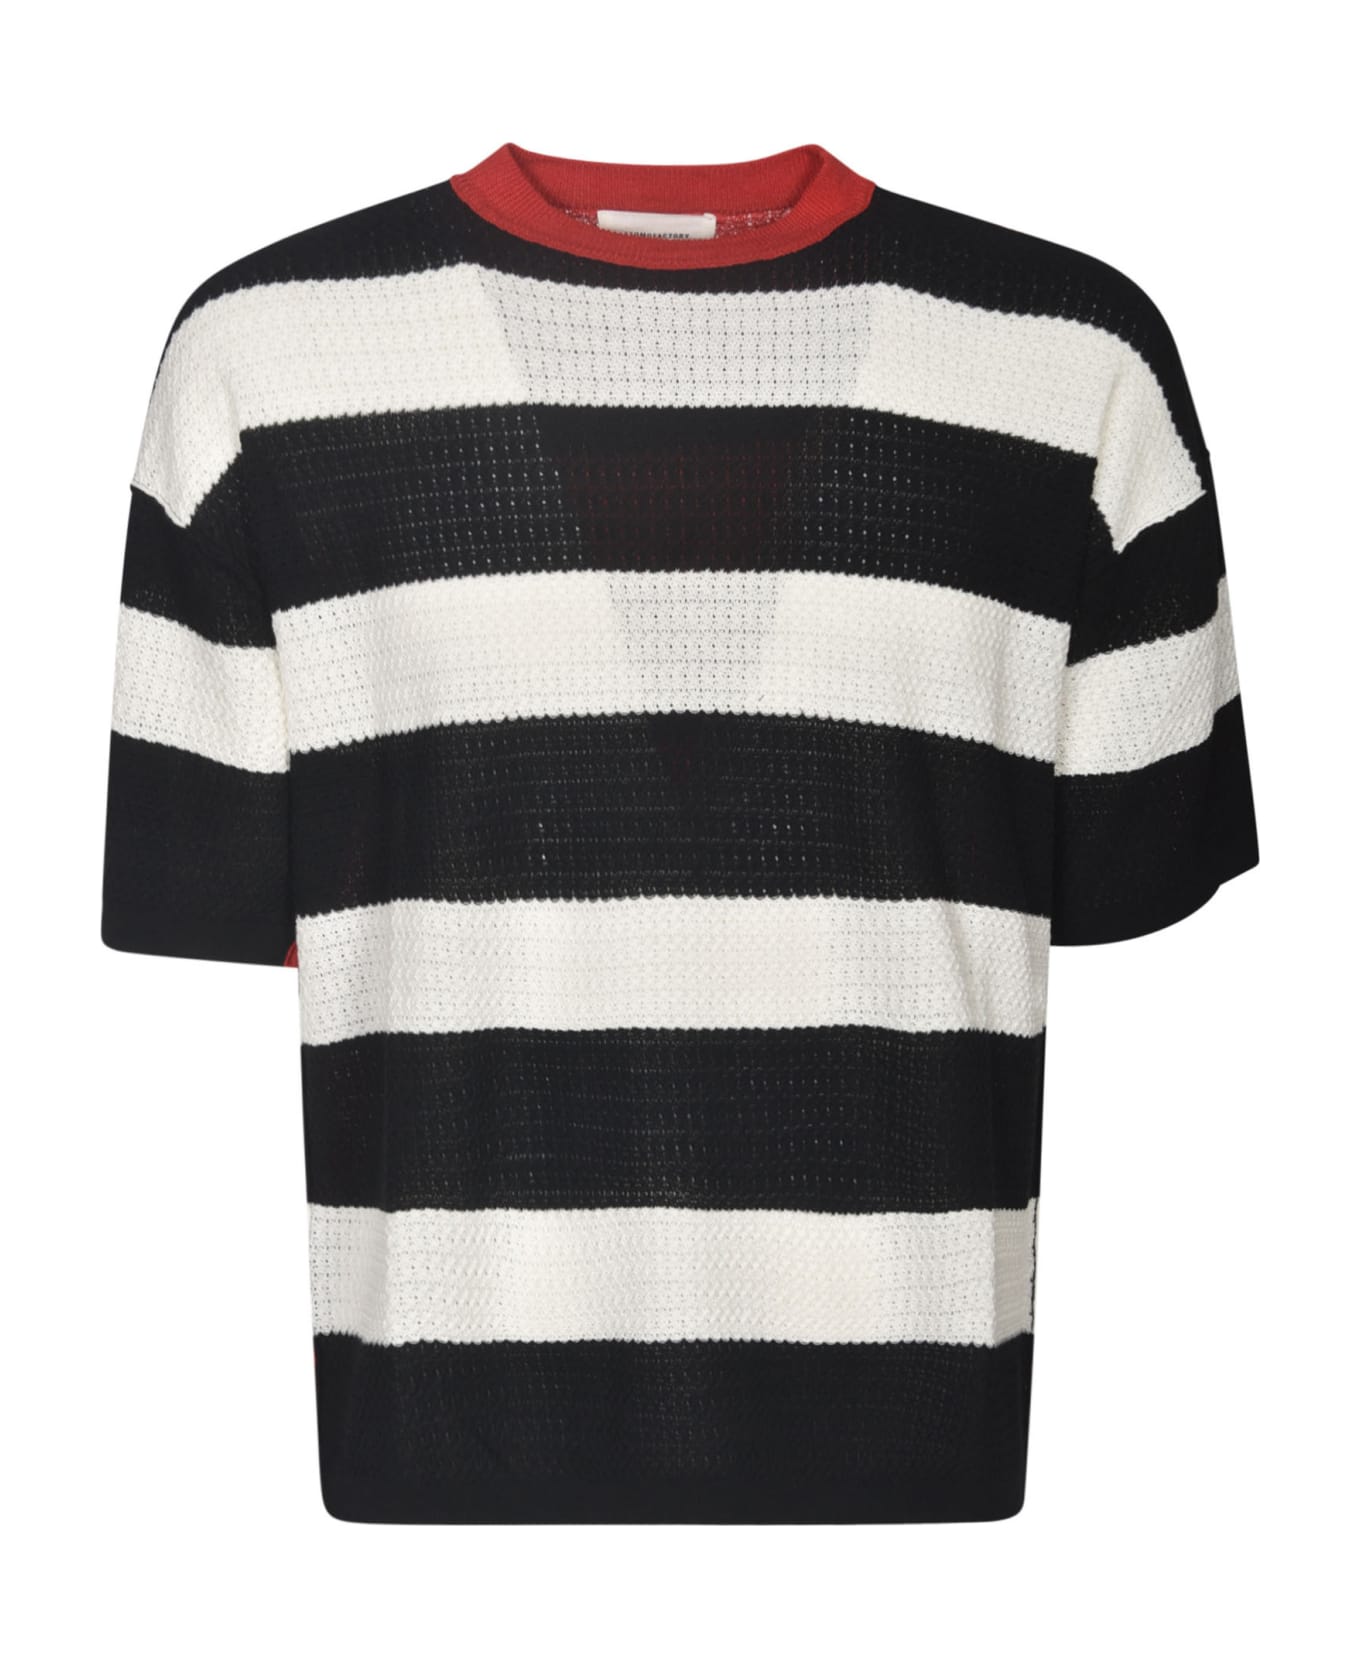 Atomo Factory Stripe Sweatshirt - Corda